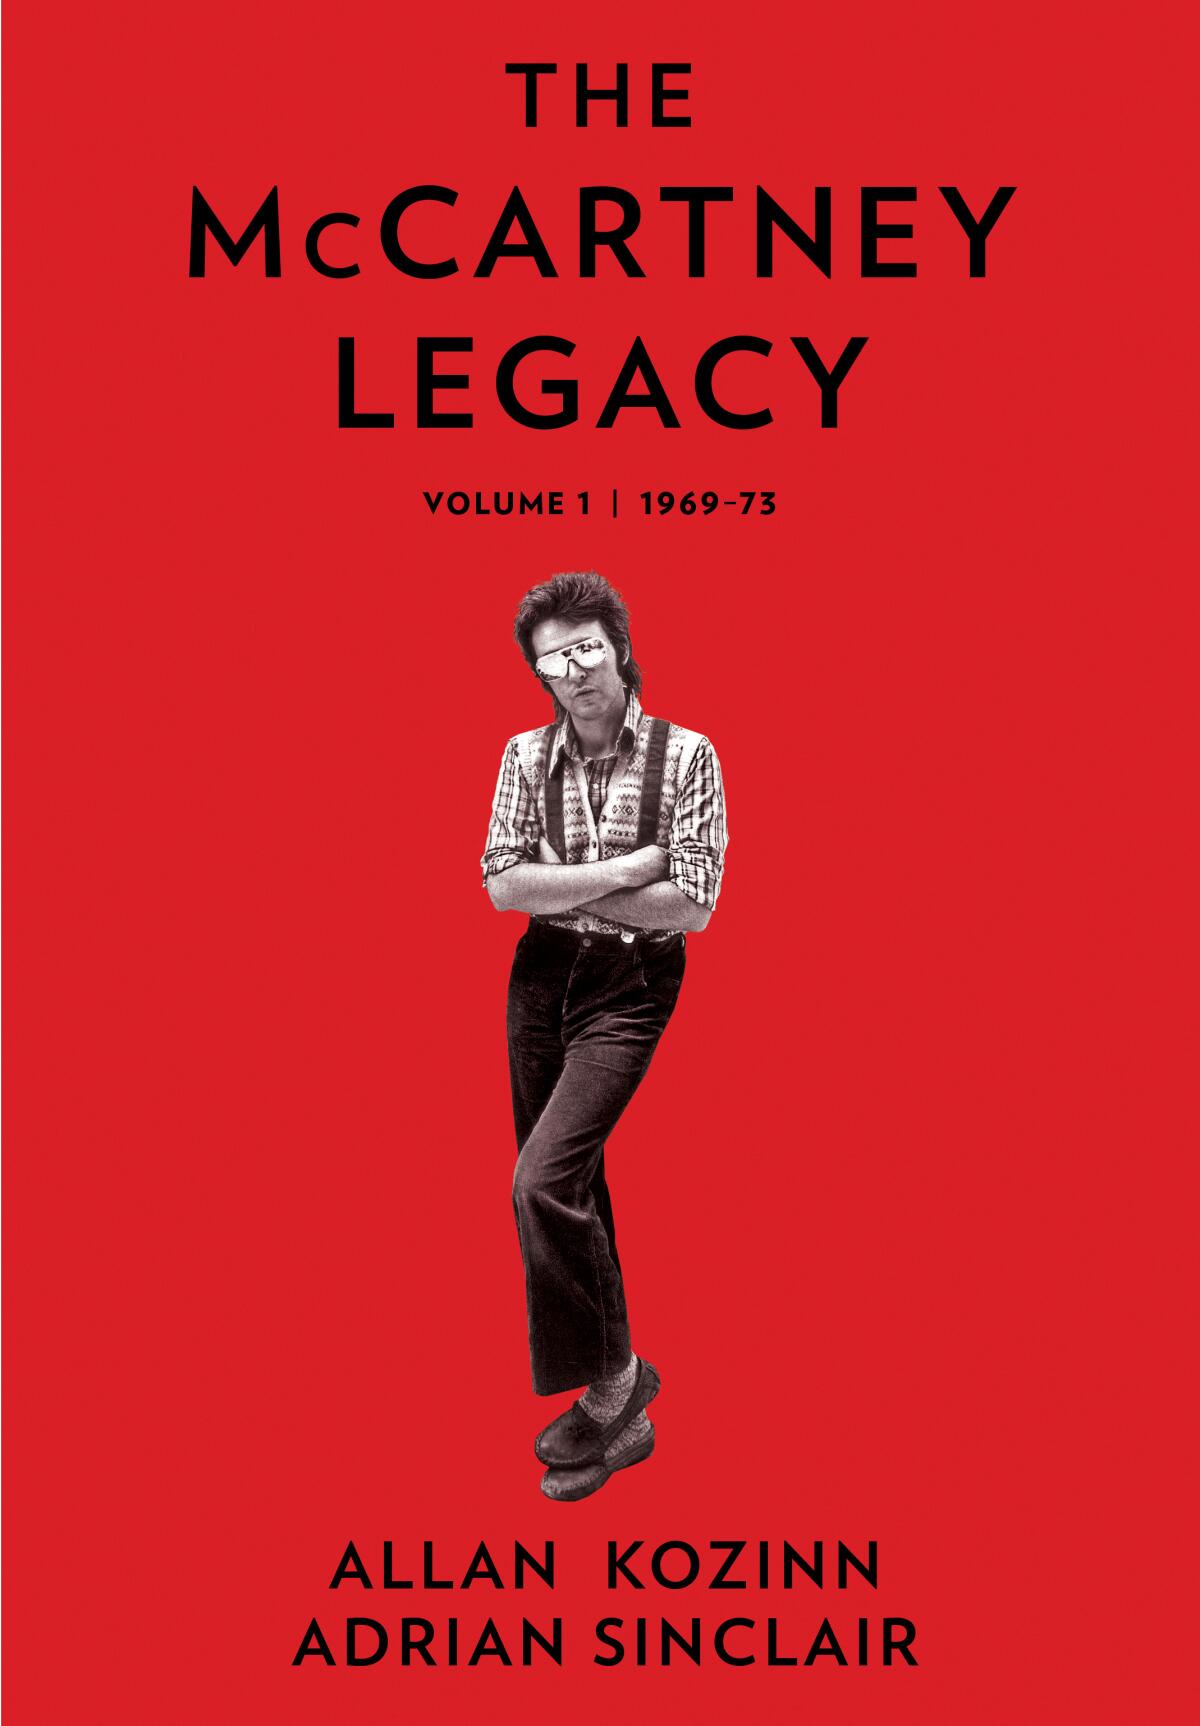 "The McCartney Legacy: Volume 1:1969-73" by Allan Kozinn and Adrian Sinclair